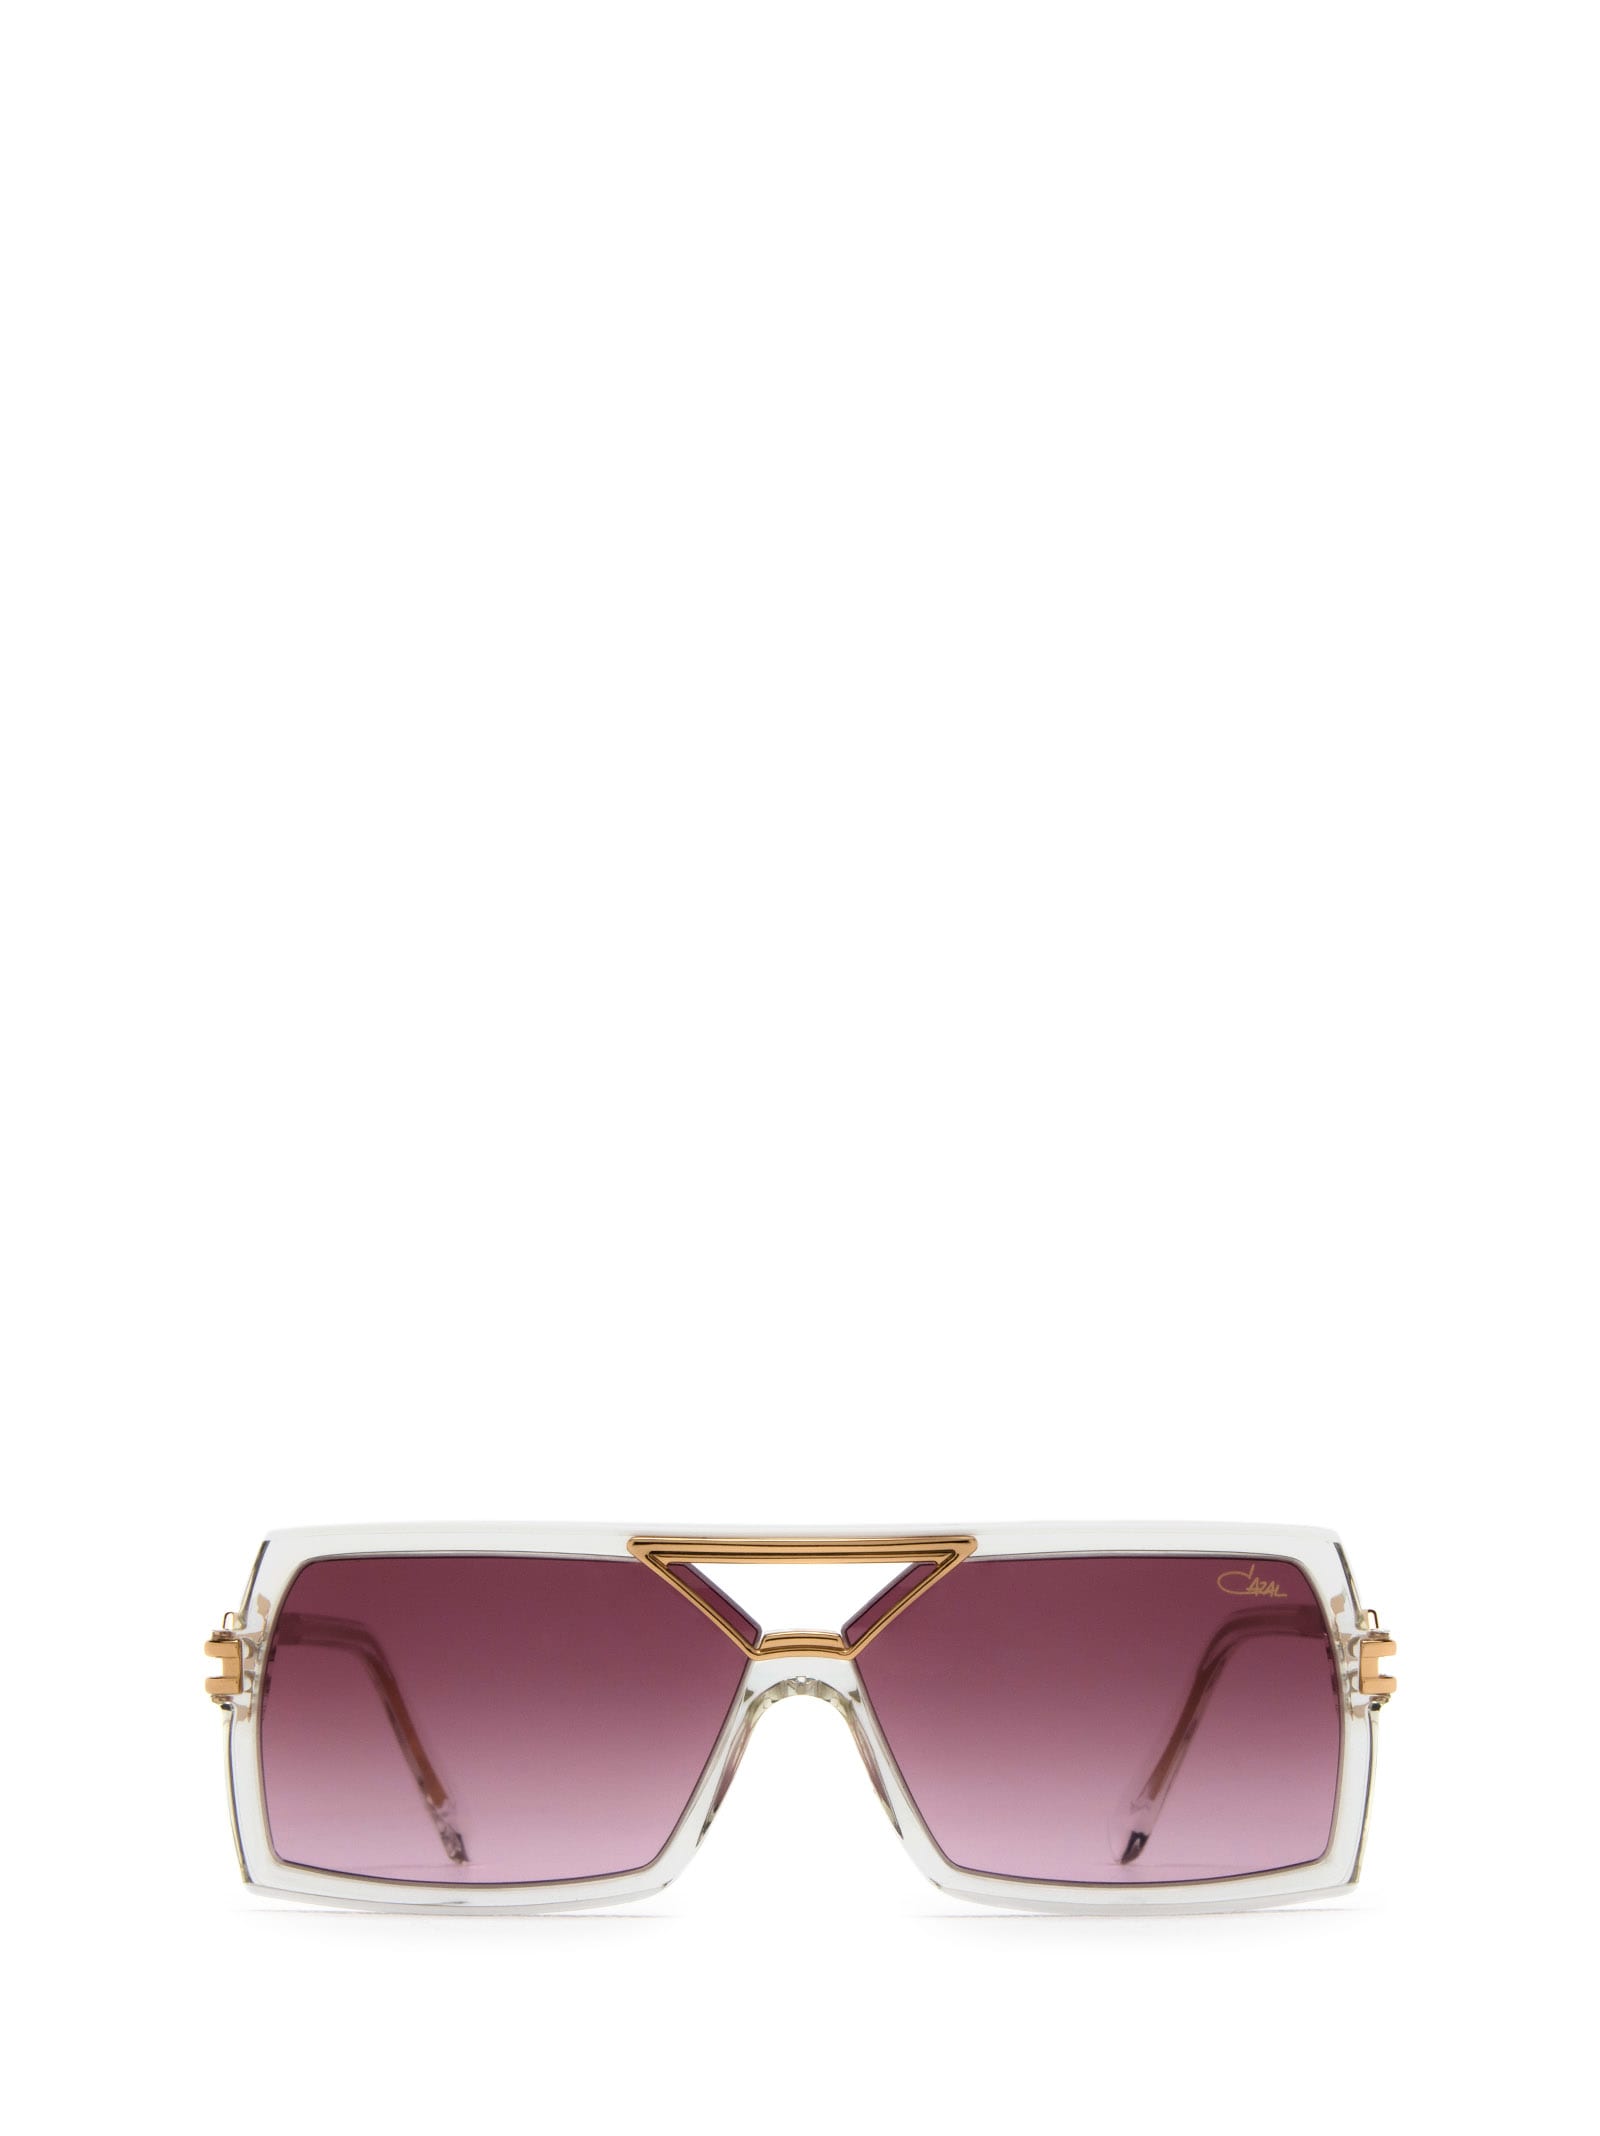 Cazal 8509 Crystal - Milky White Sunglasses